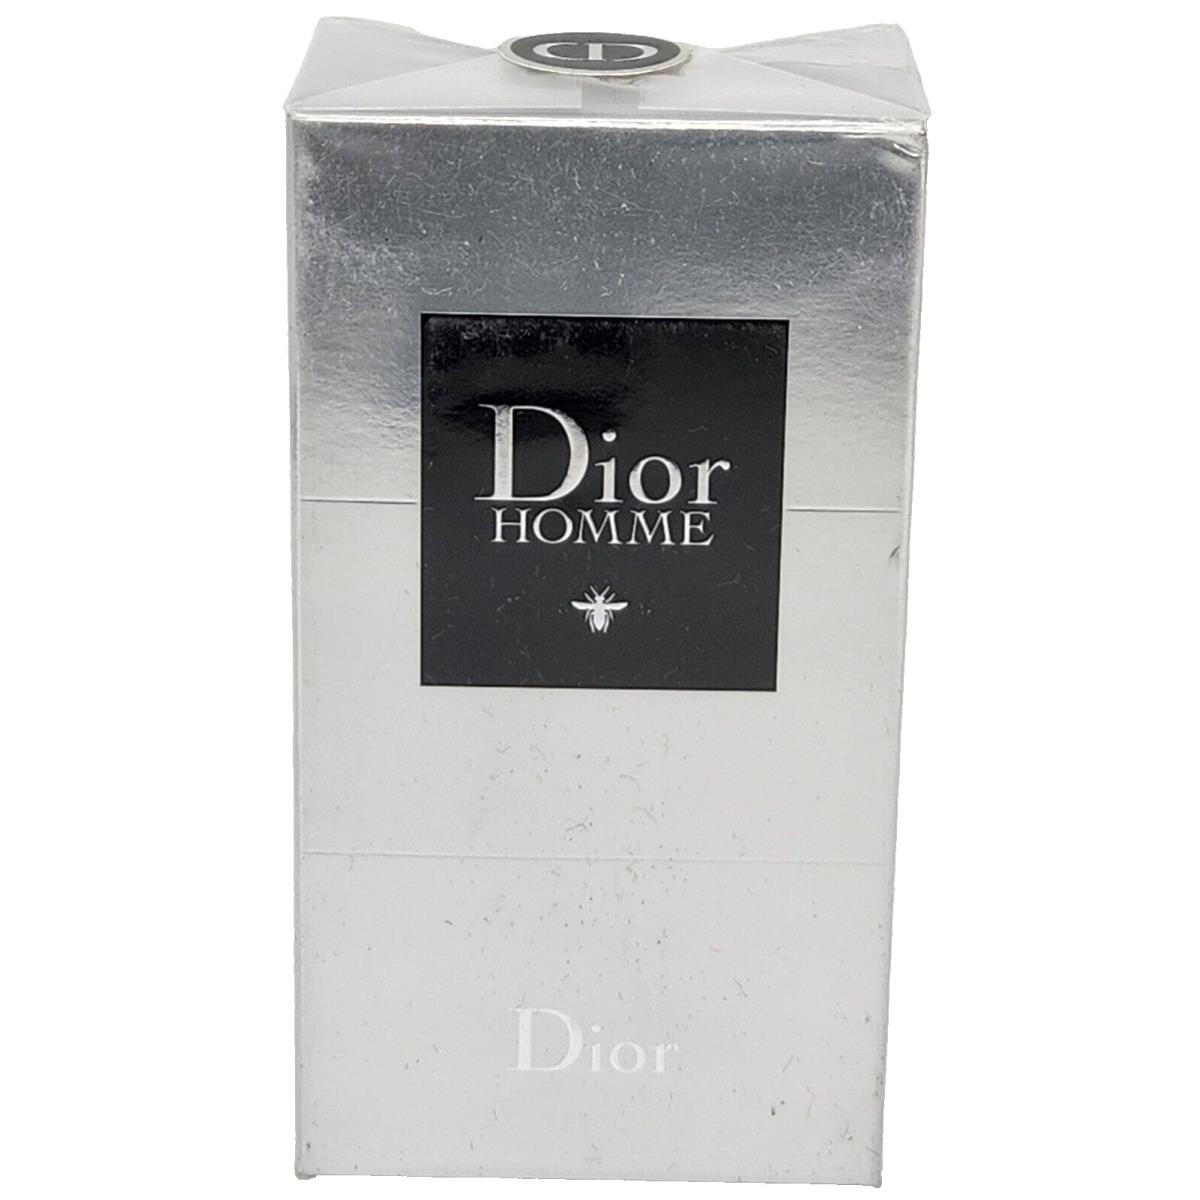 Dior Homme By Christian Dior Eau de Toilette Spray 3.4 fl oz